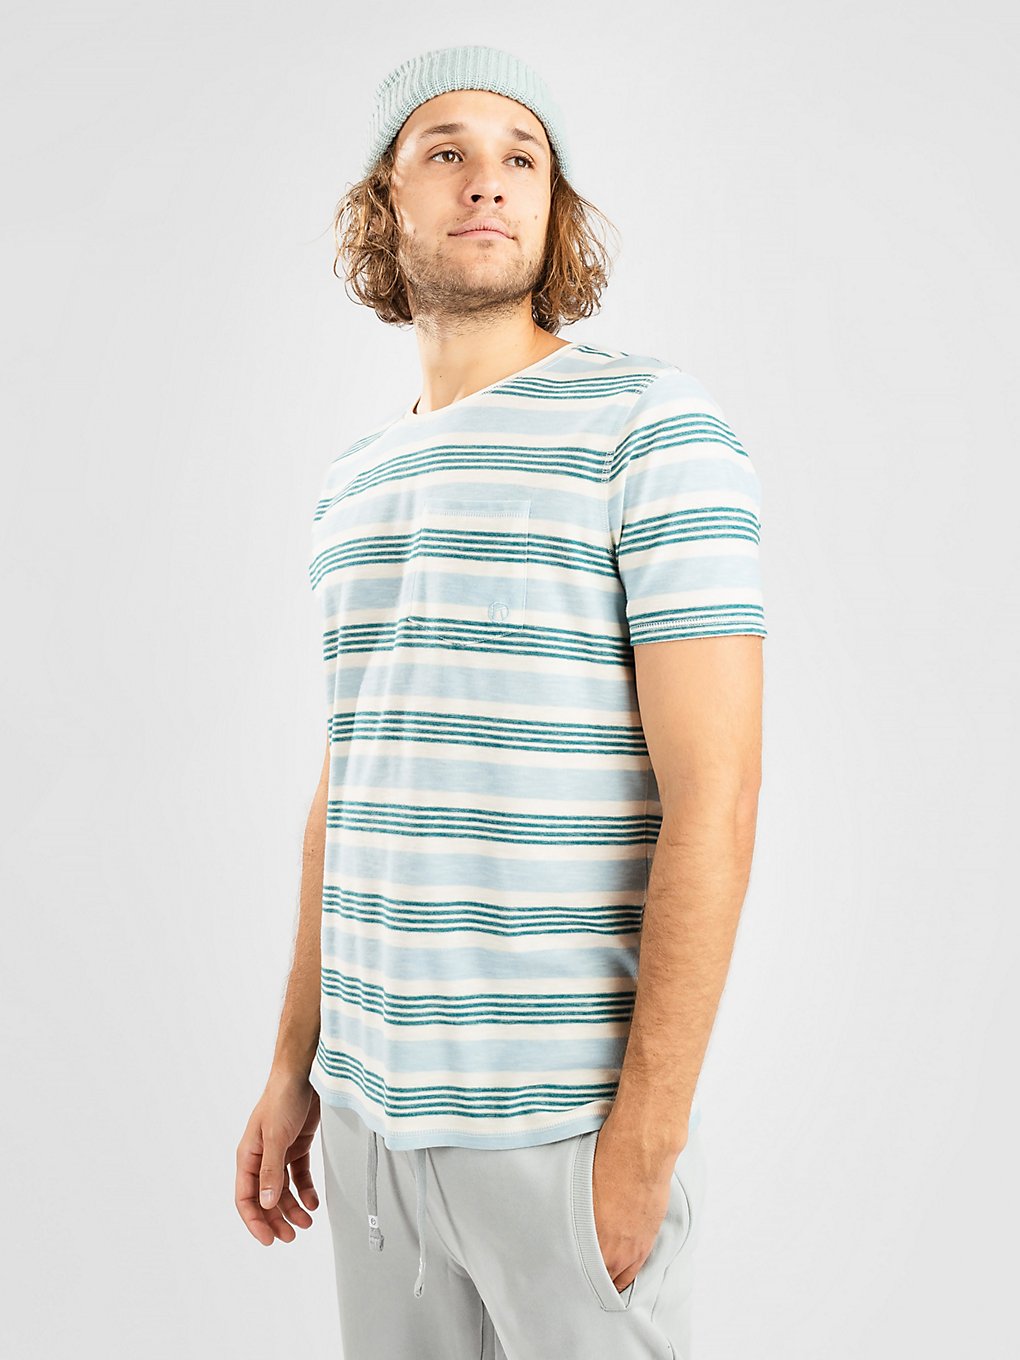 Kazane Olly T-Shirt patroon